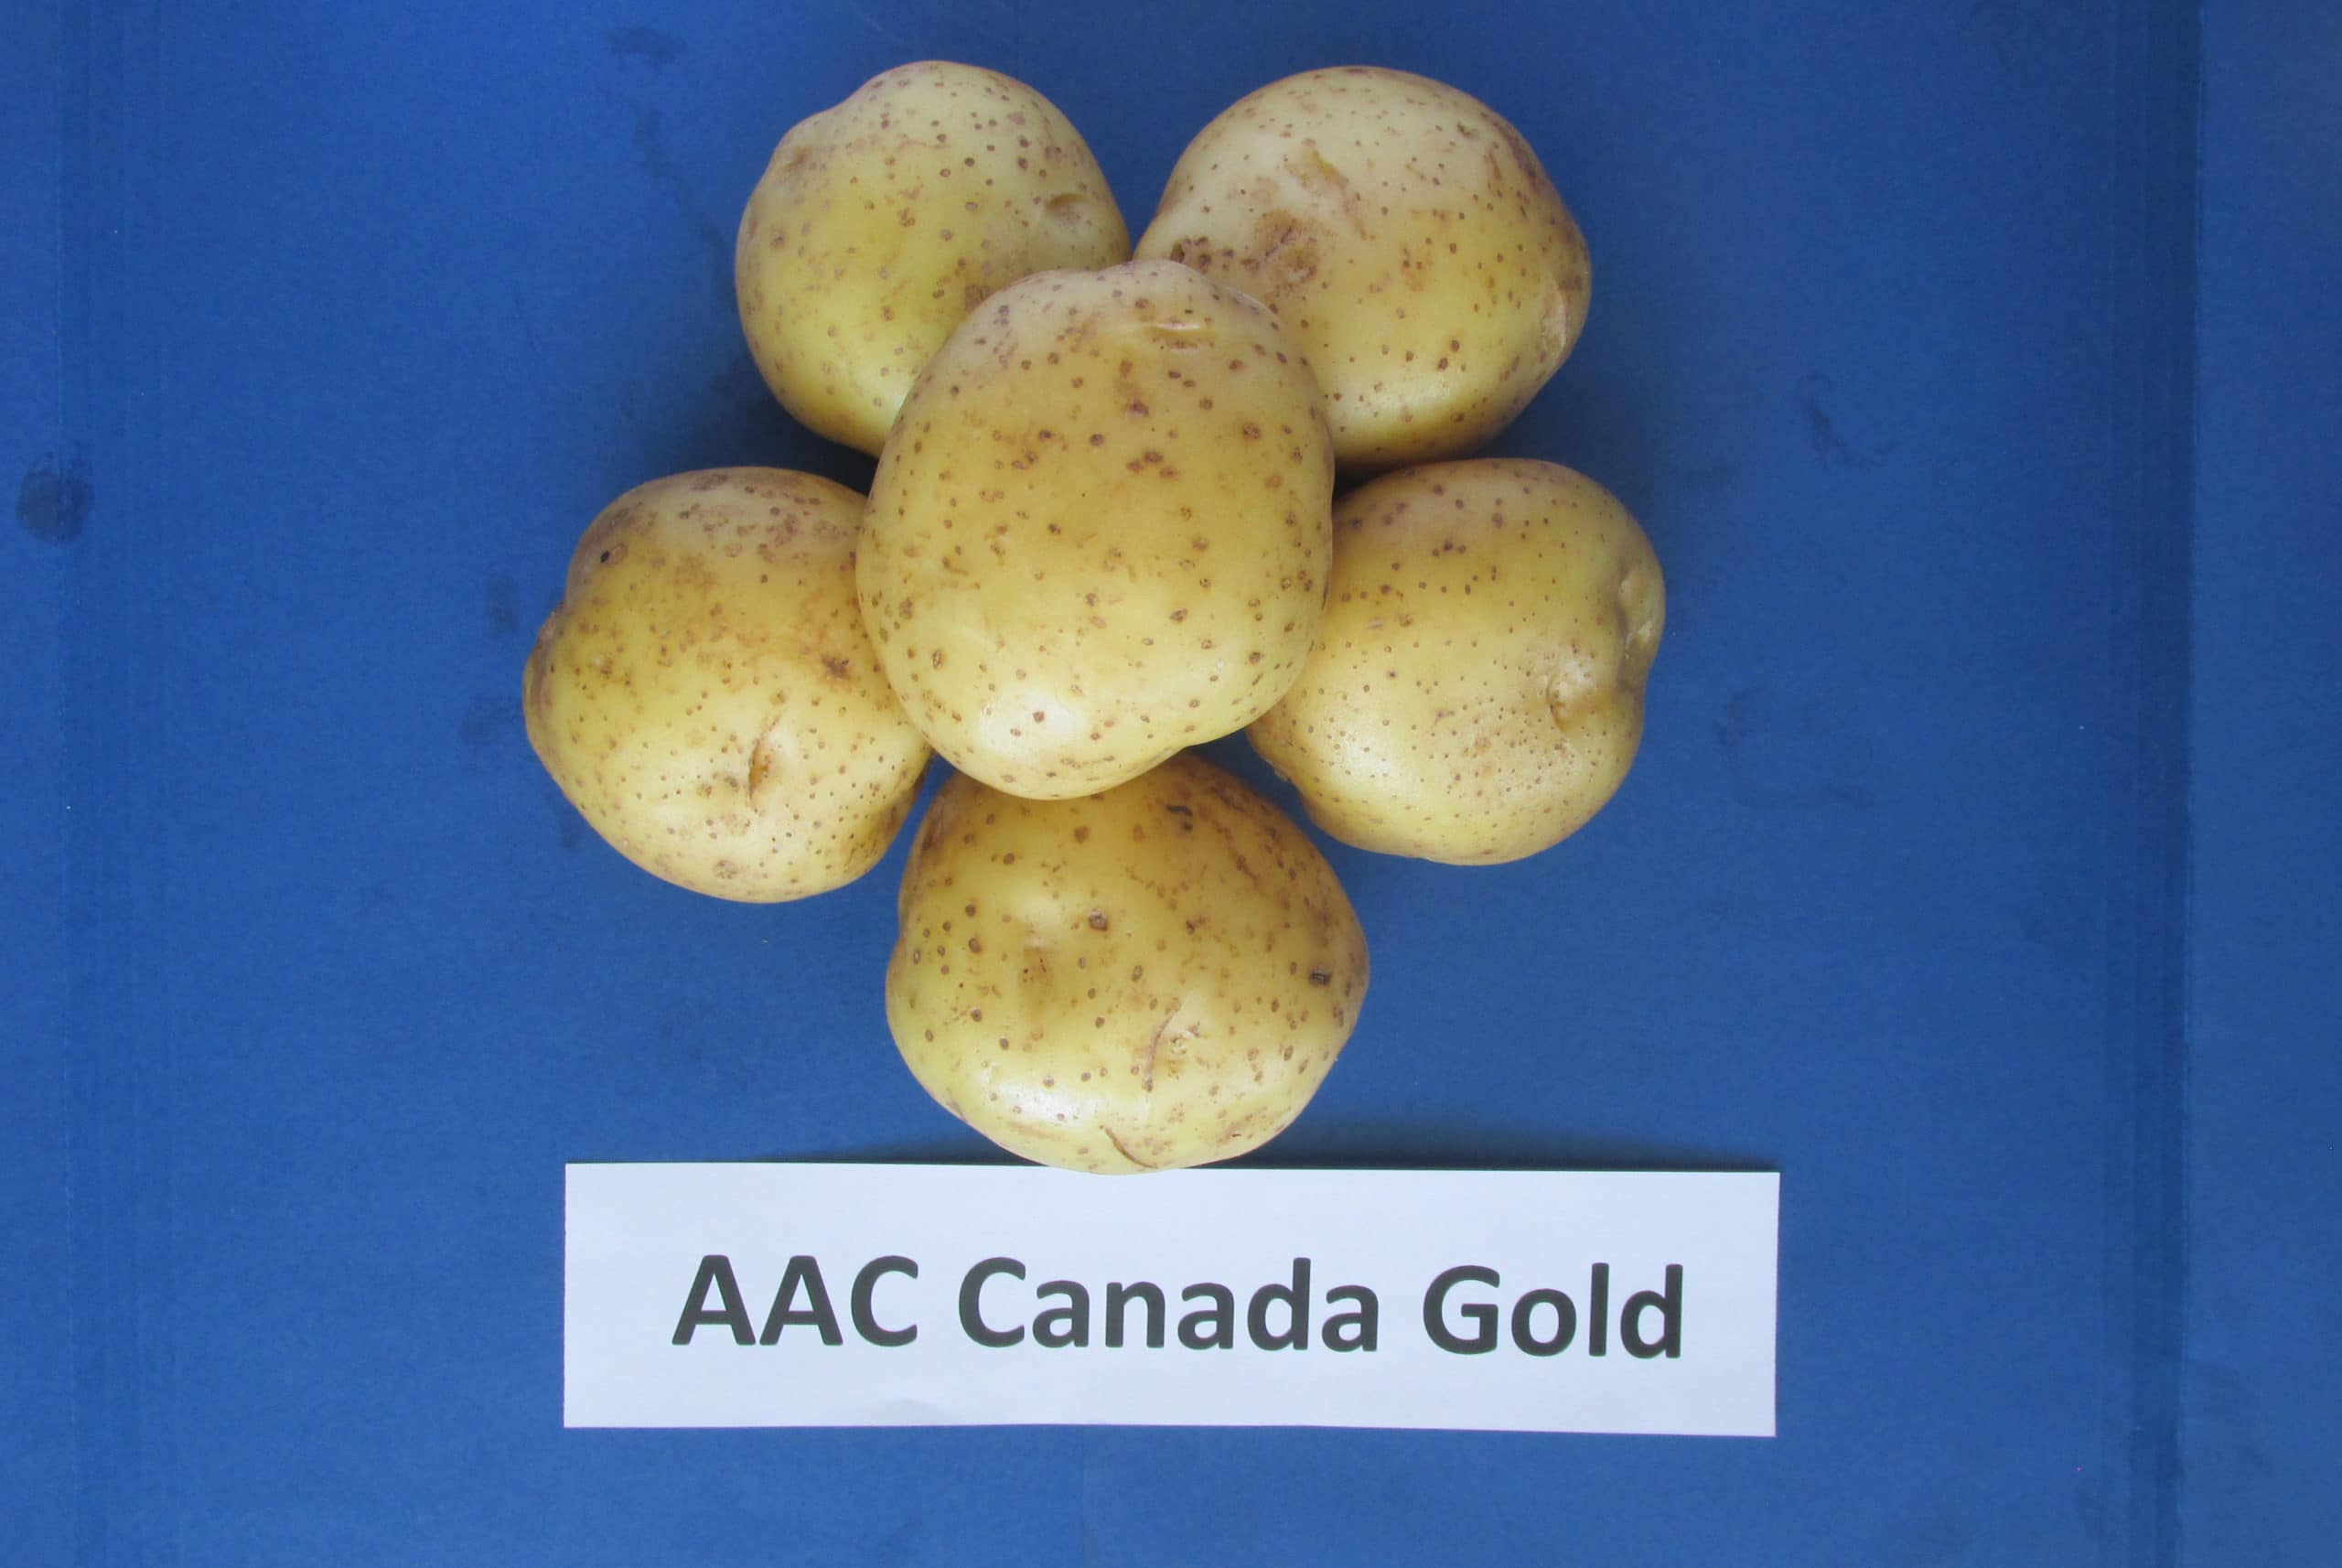 AAC Madam Blue potato variety